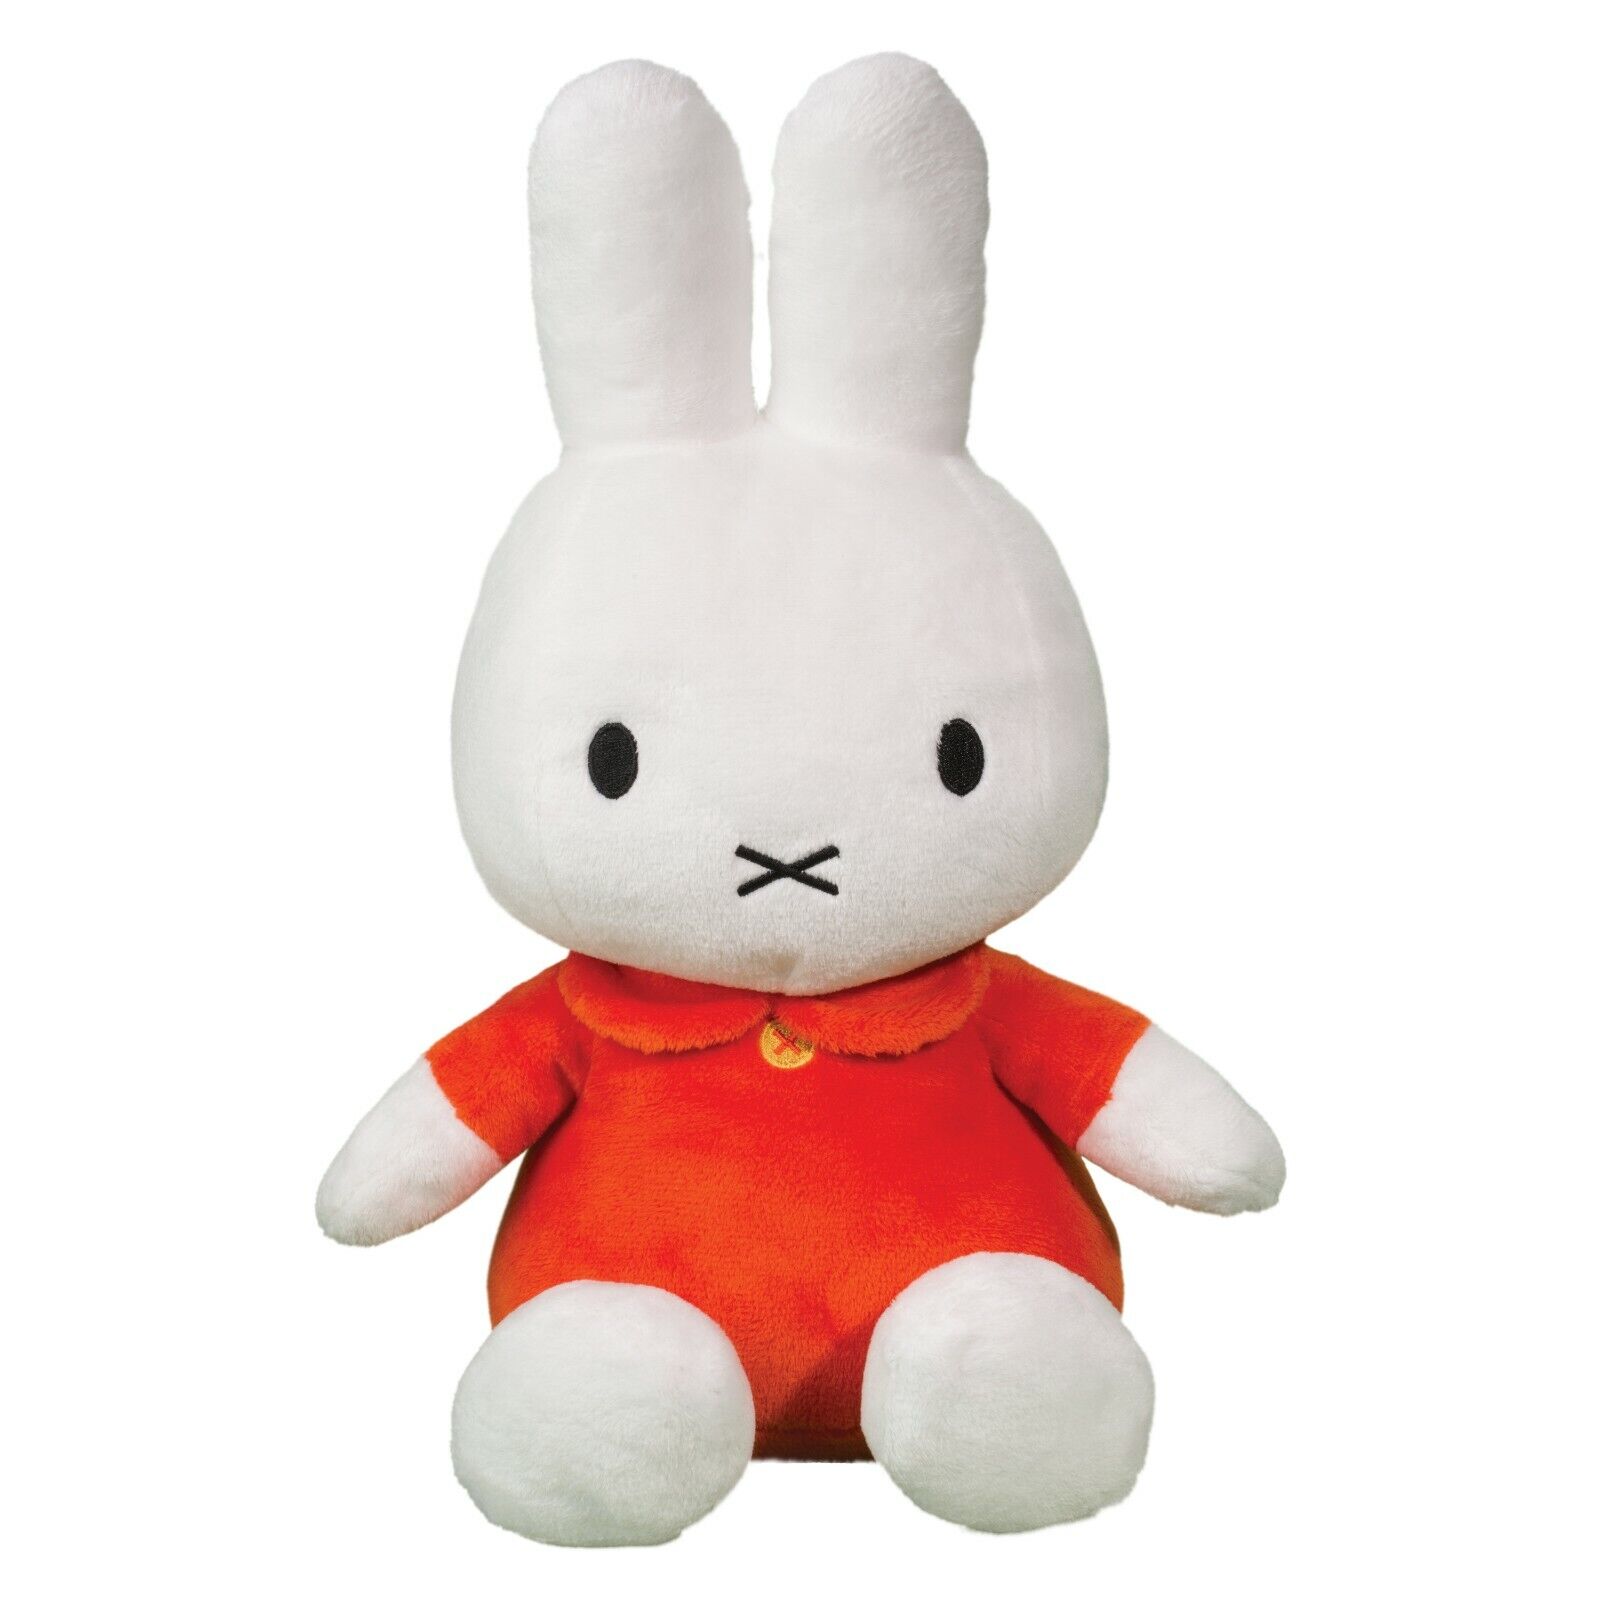 Plush RED MIFFY RABBIT Bunny Stuffed Animal - by Douglas Cuddle Toys - #7442